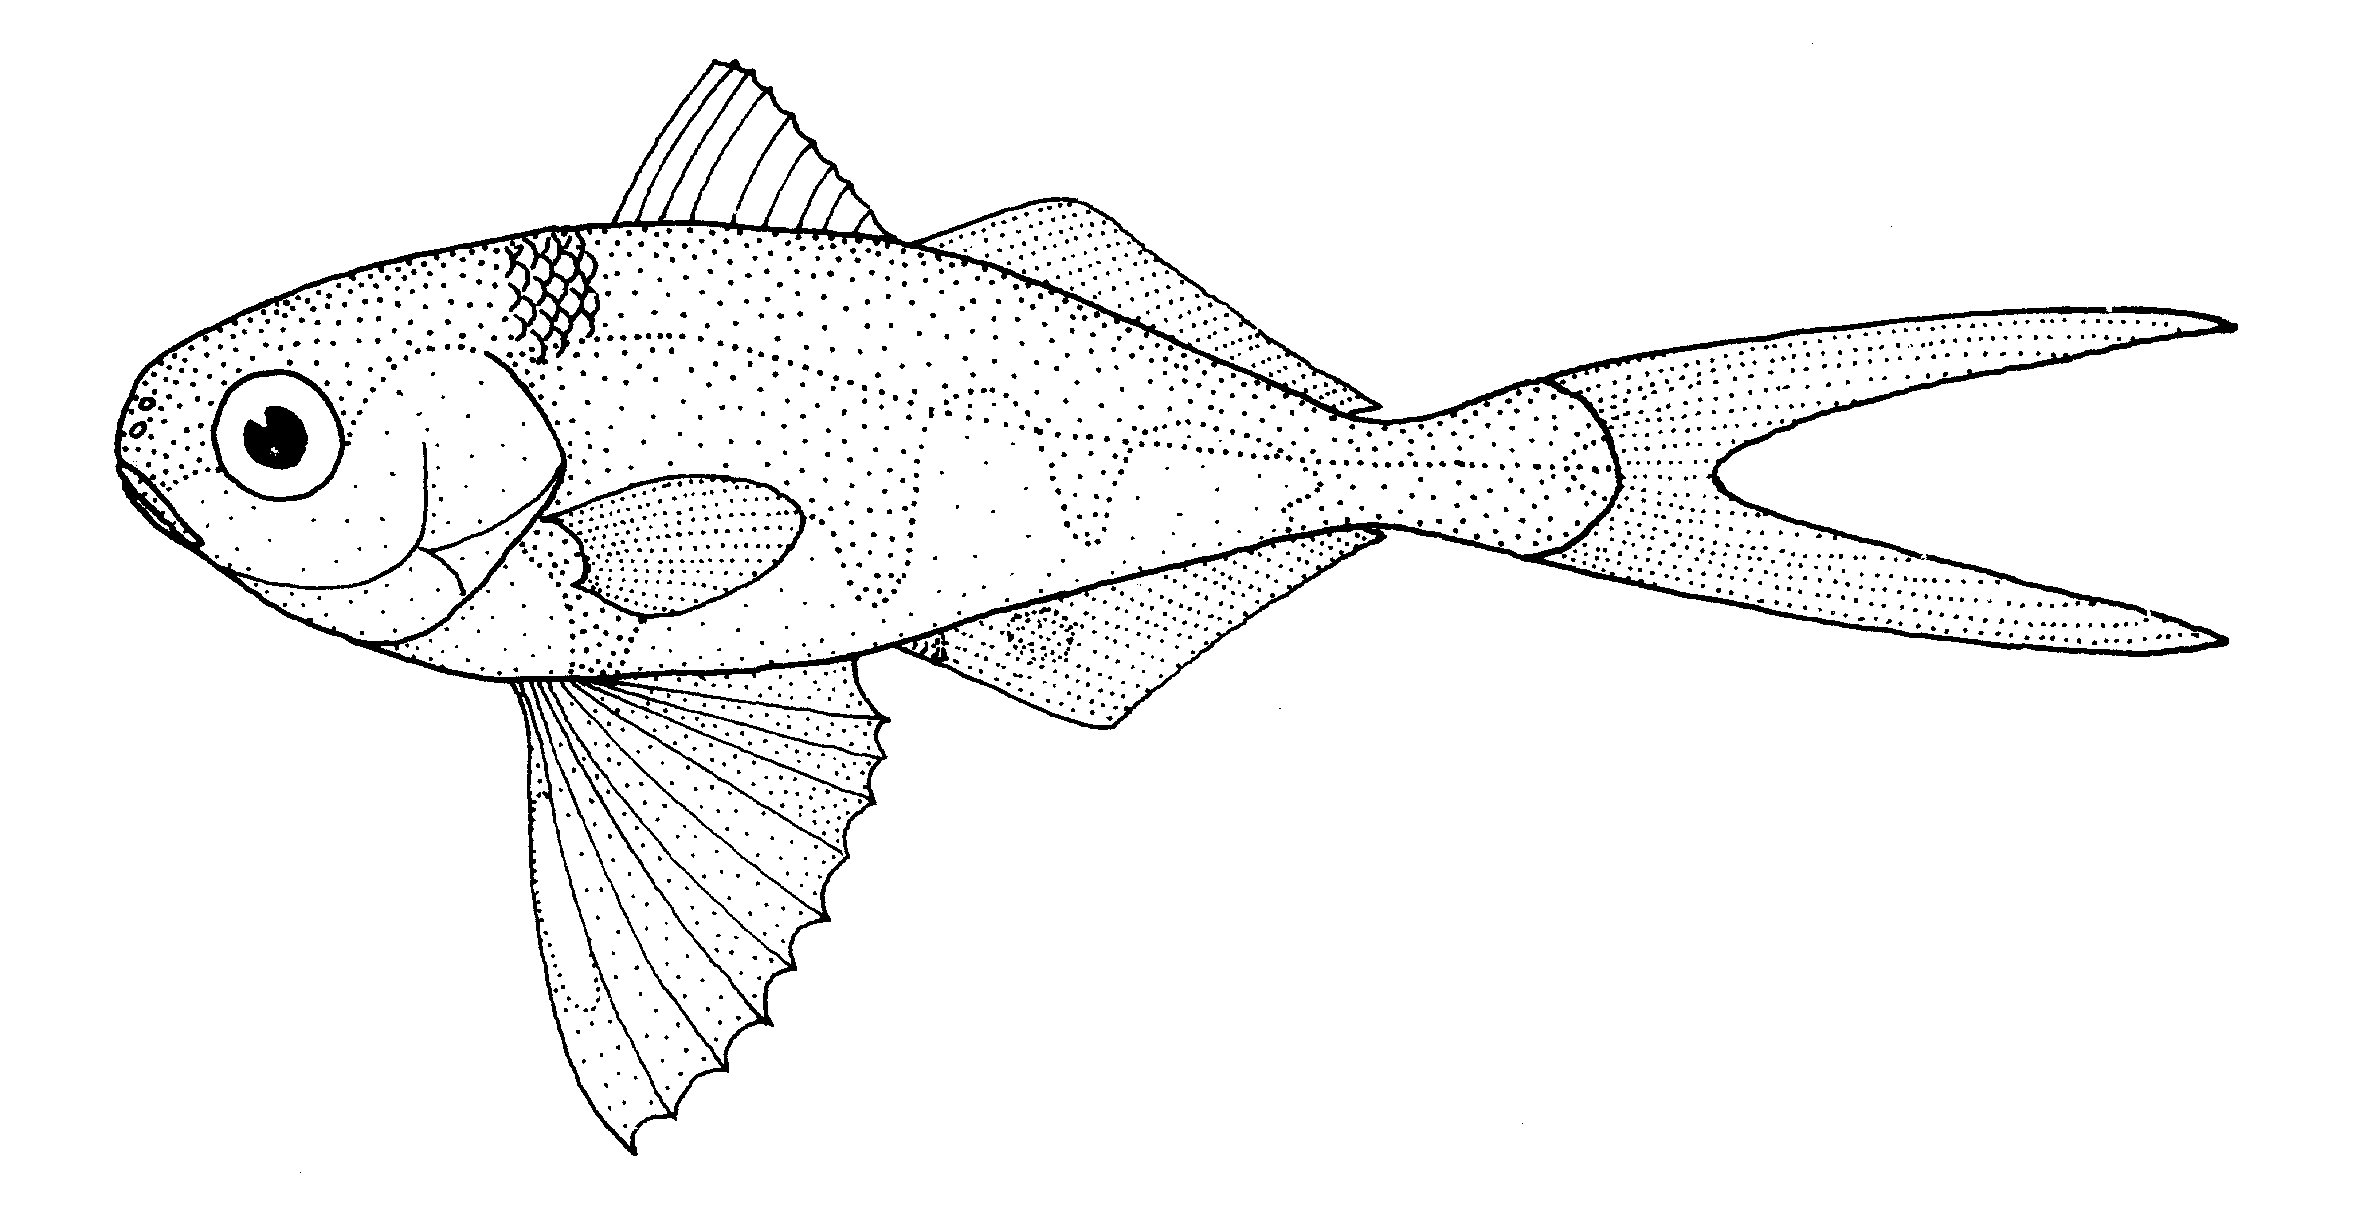 Man-of-war fish wallpaper